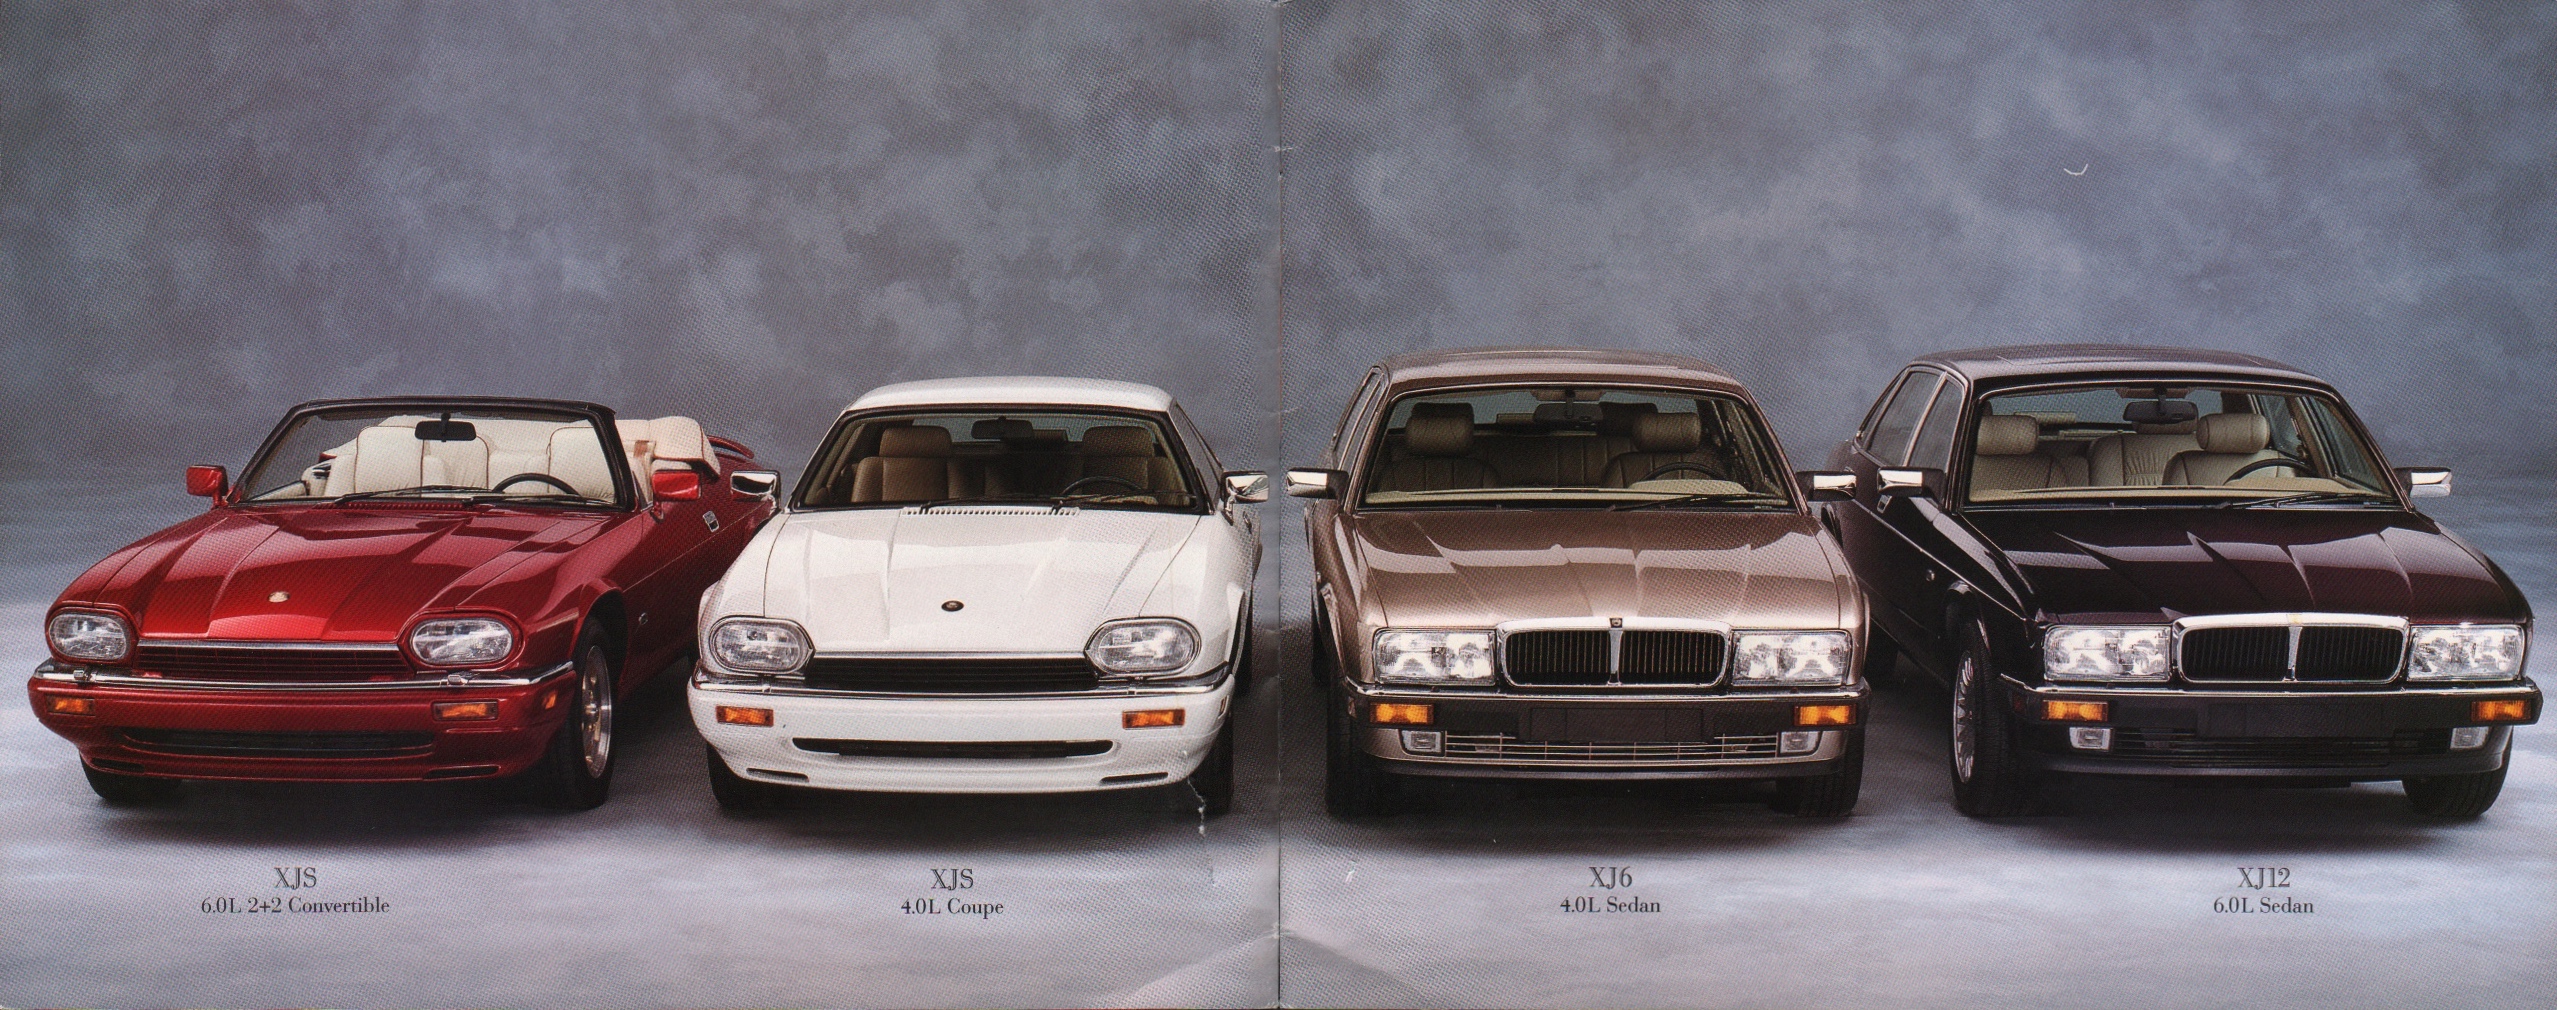 1994 Jaguar Model Lineup Brochure Page 1